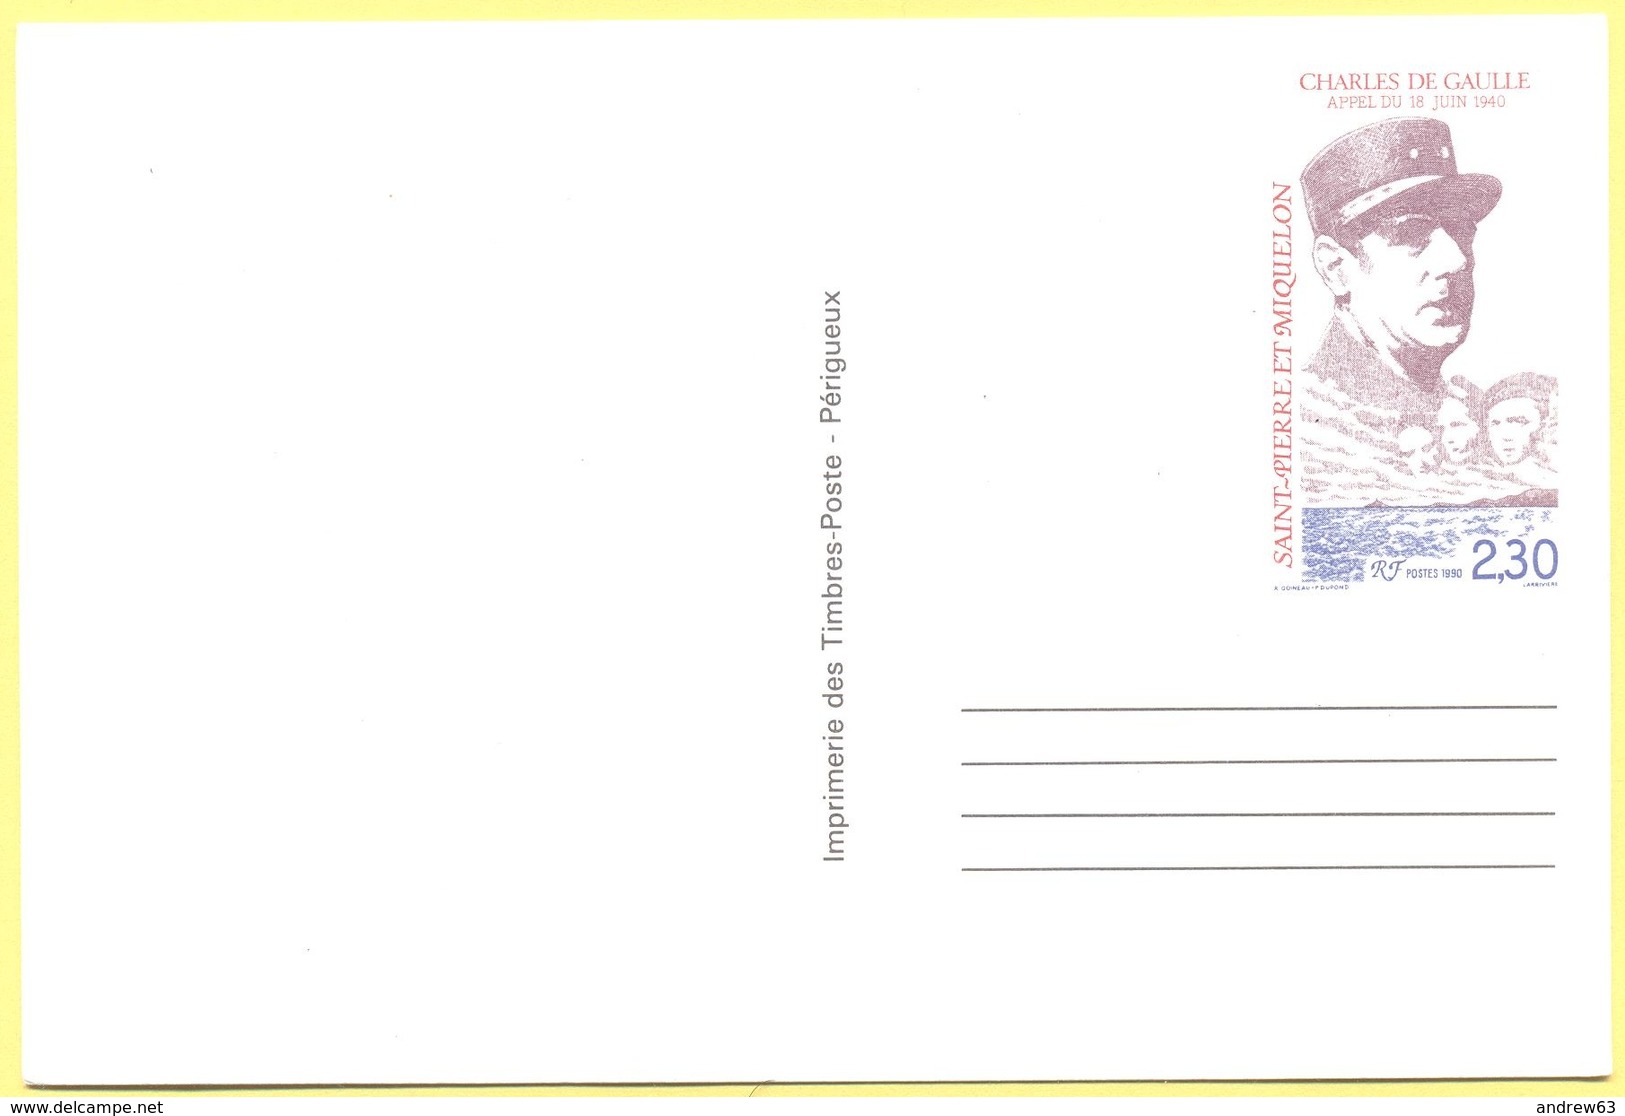 St.Pierre & Miquelon - 2,30 Charles De Gaulle - Carte Postale - Intero Postale - Entier Postal - Postal Stationery - Not - Postal Stationery